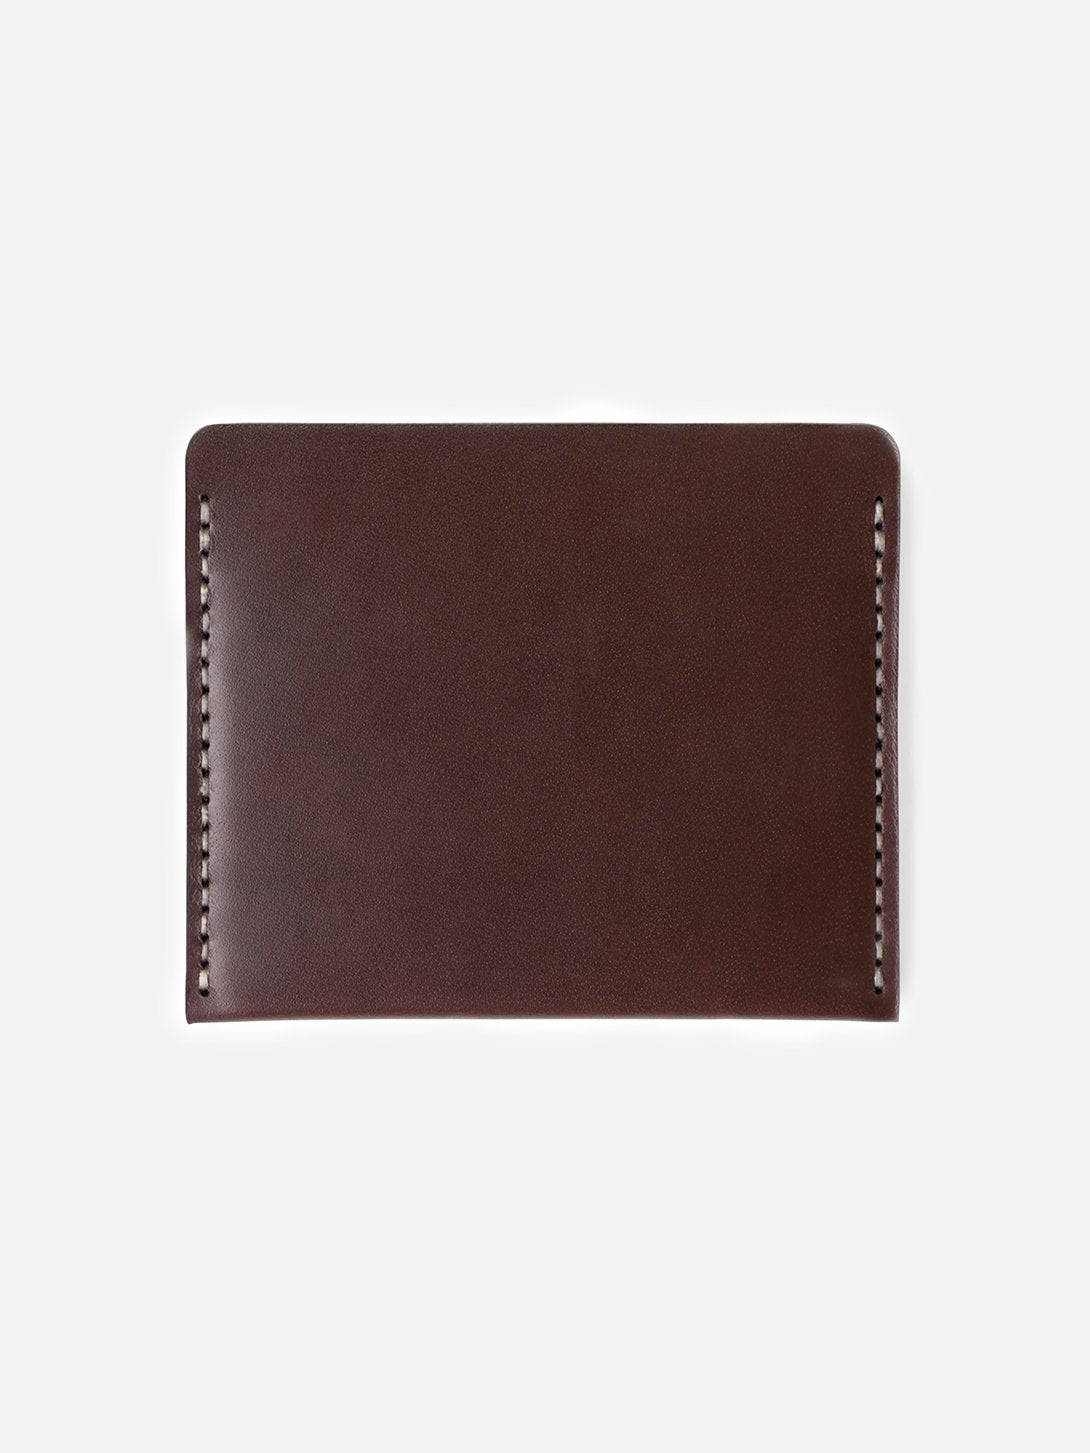 OX BLOOD mens card holder brown leather wallet cascade wallet makr